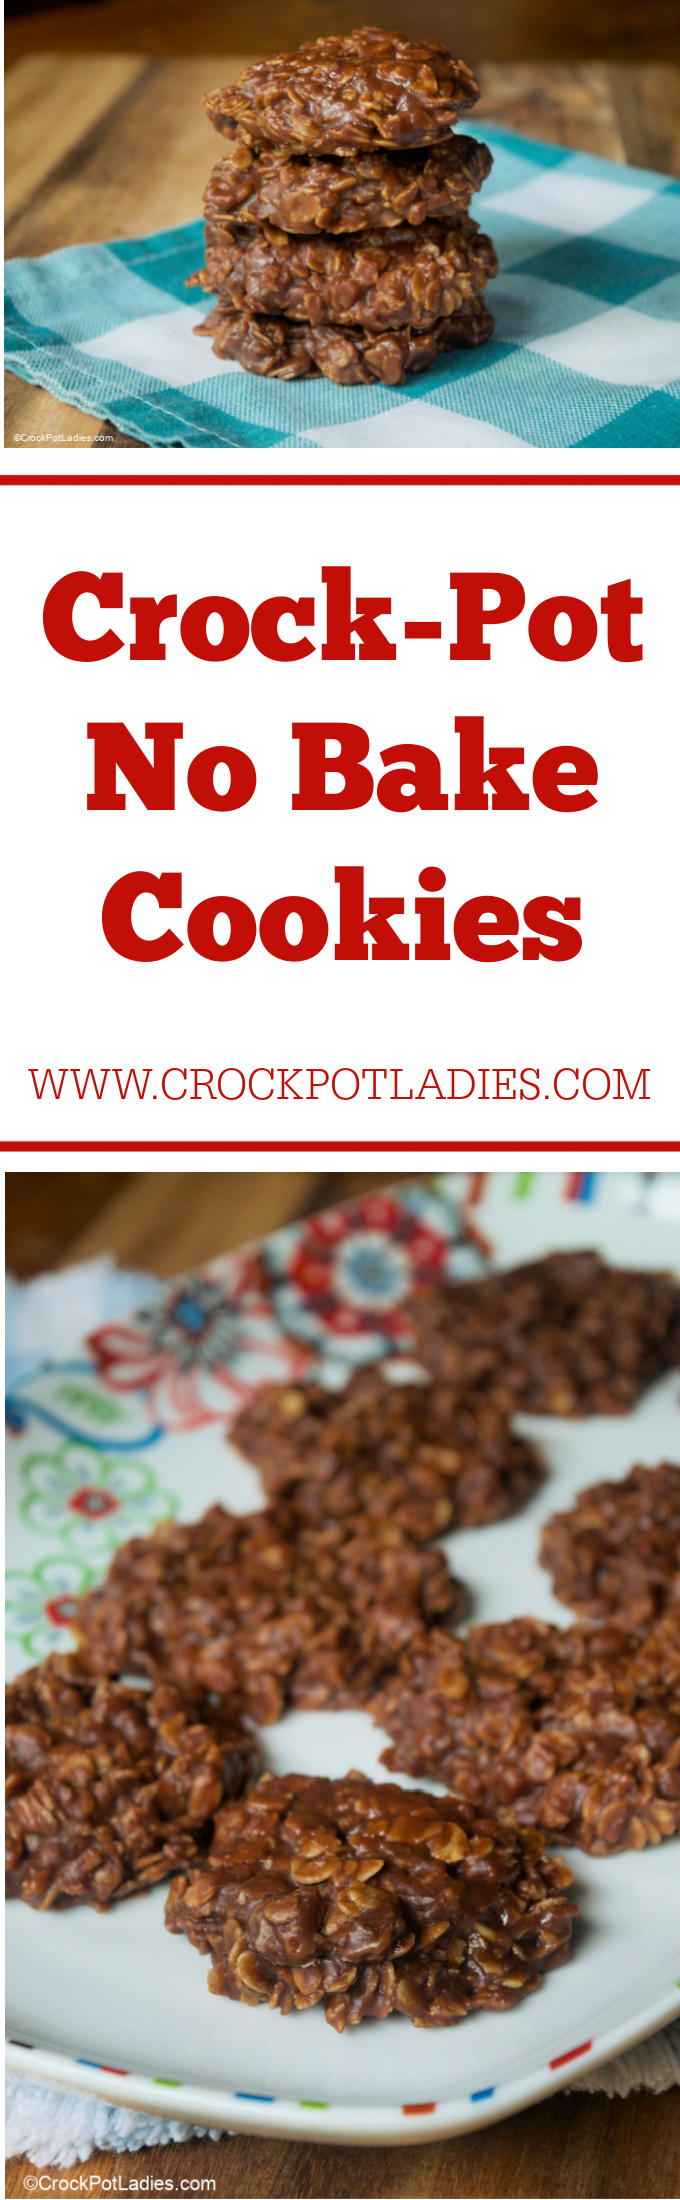 Crock-Pot No Bake Cookies